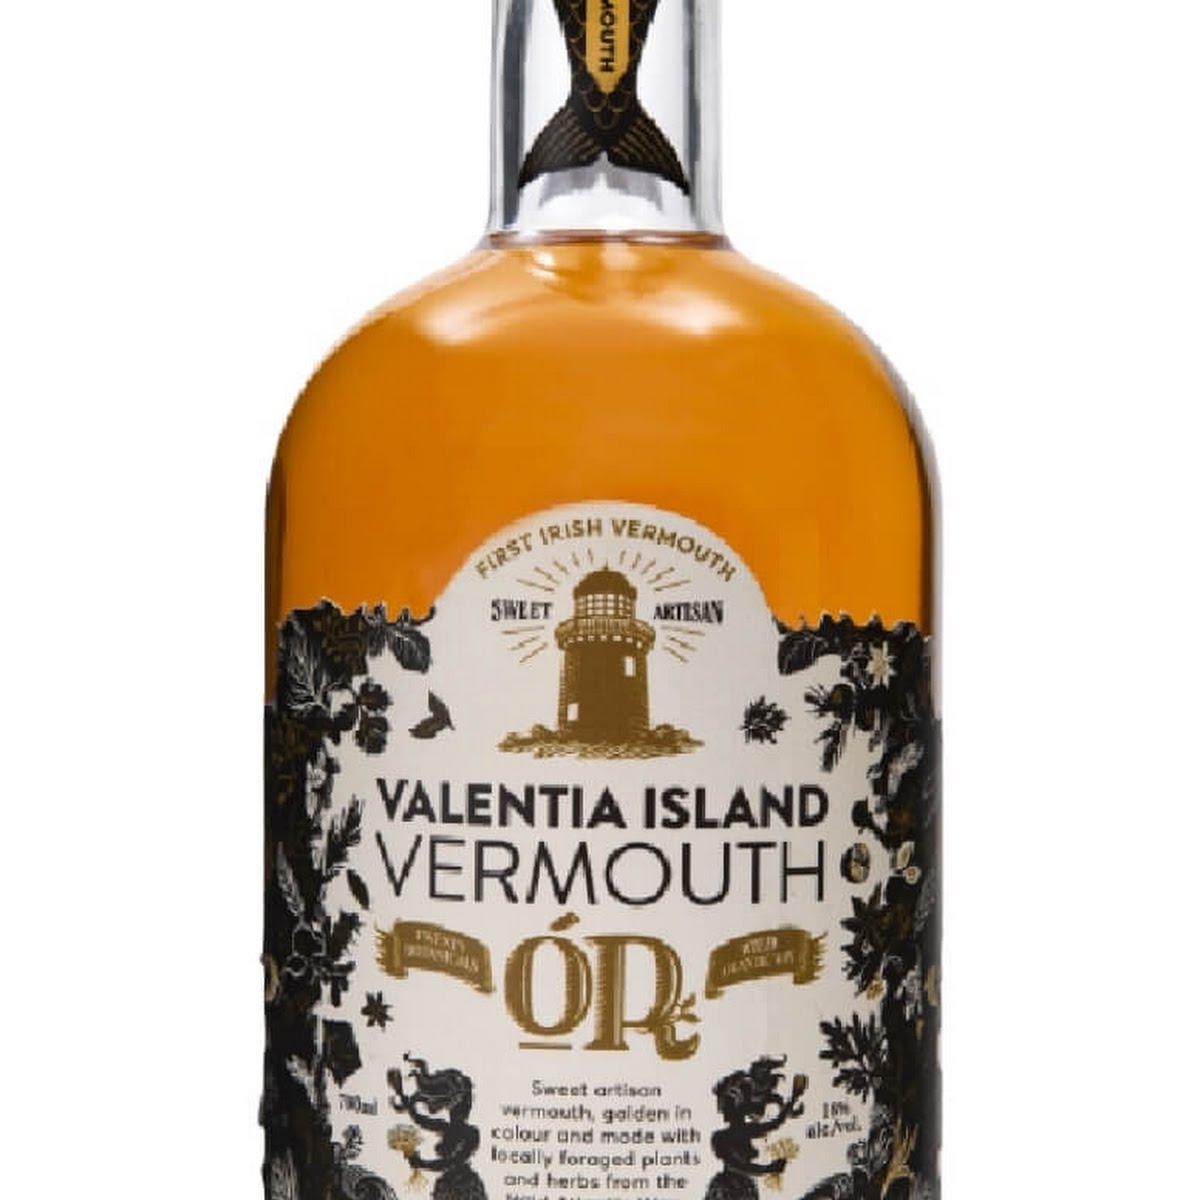 Valentia Island Vermouth, €35